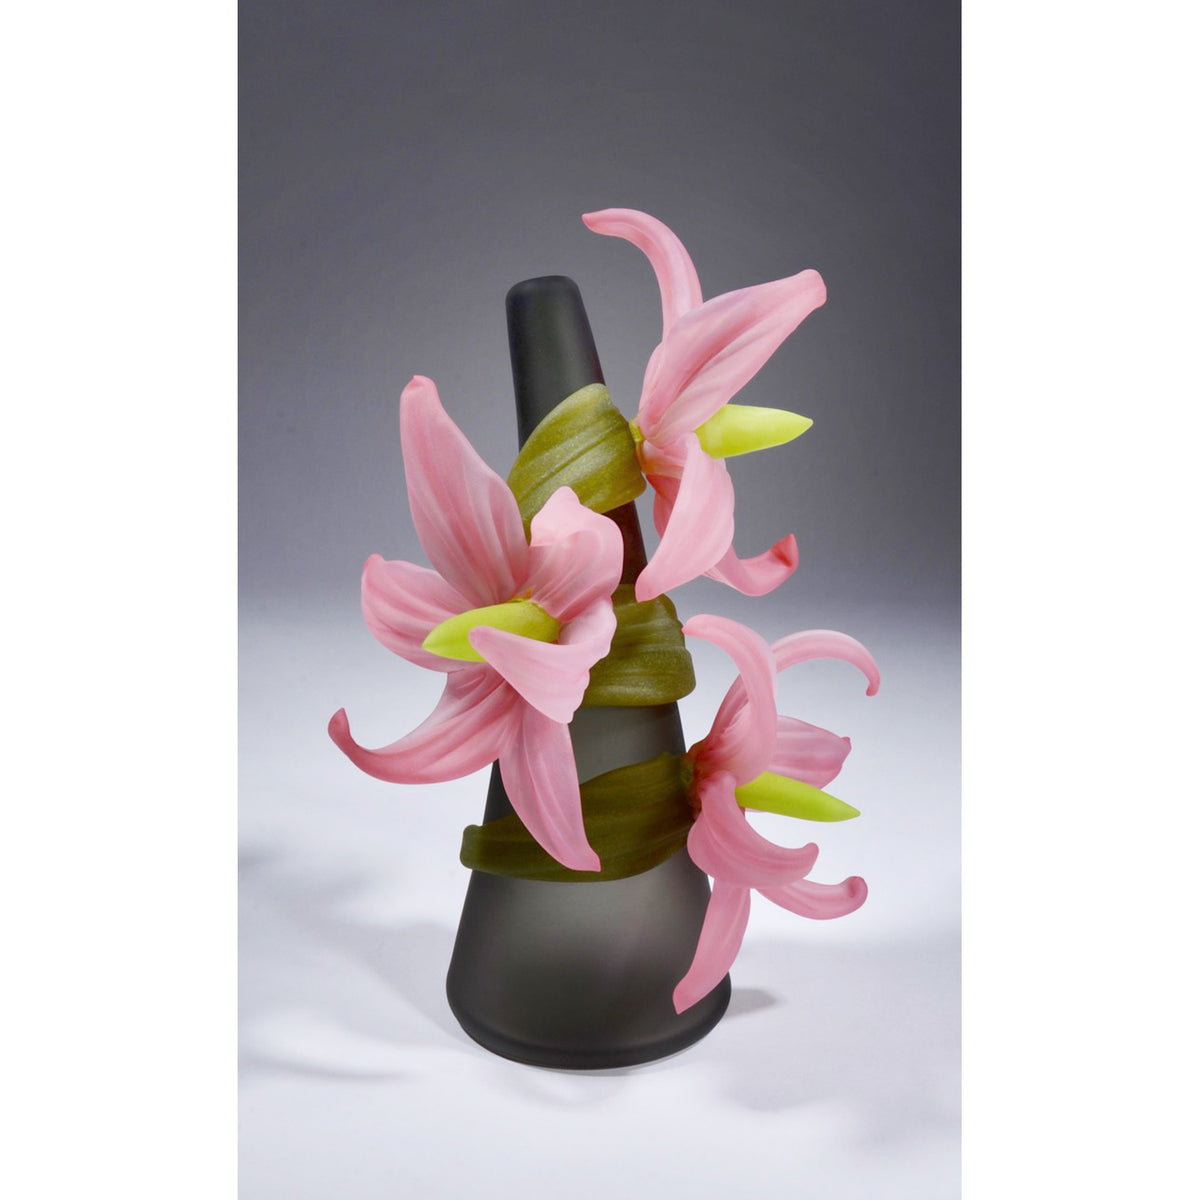 Sue Rankin - Sprig Vase Grey with Pink Flowers